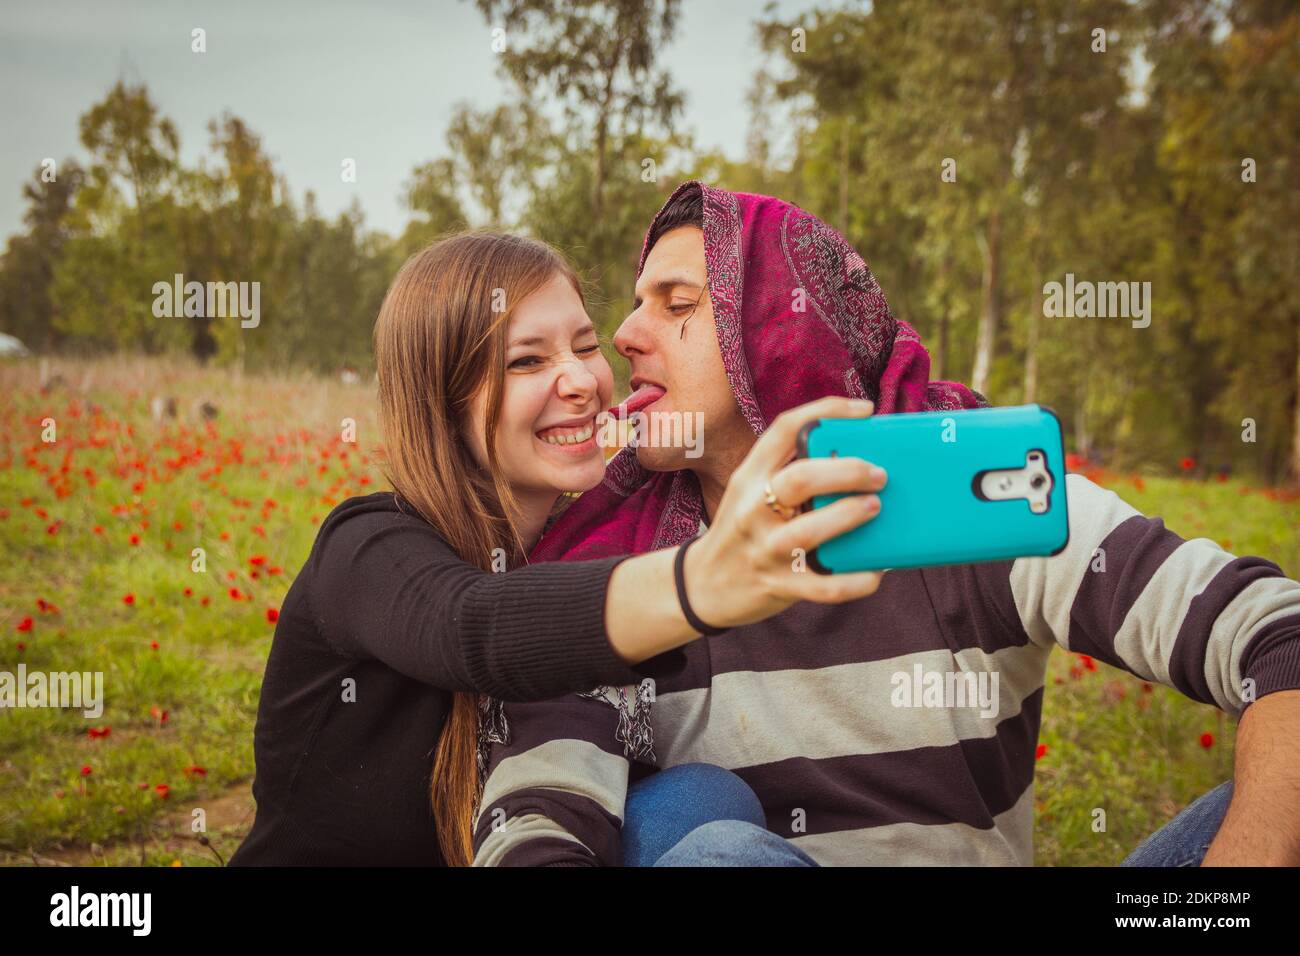 licking girlfriend selfie